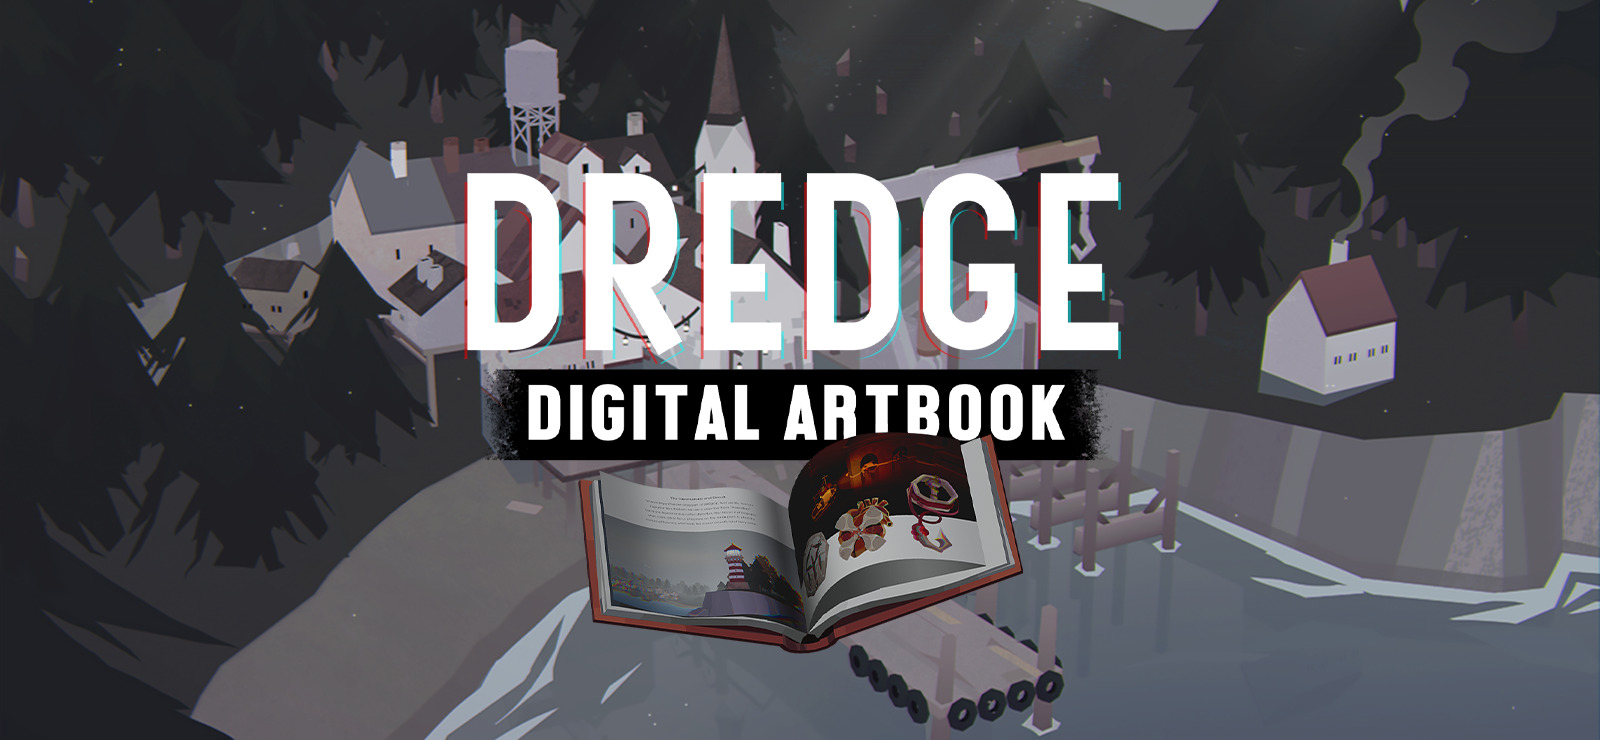 DREDGE - Digital Artbook